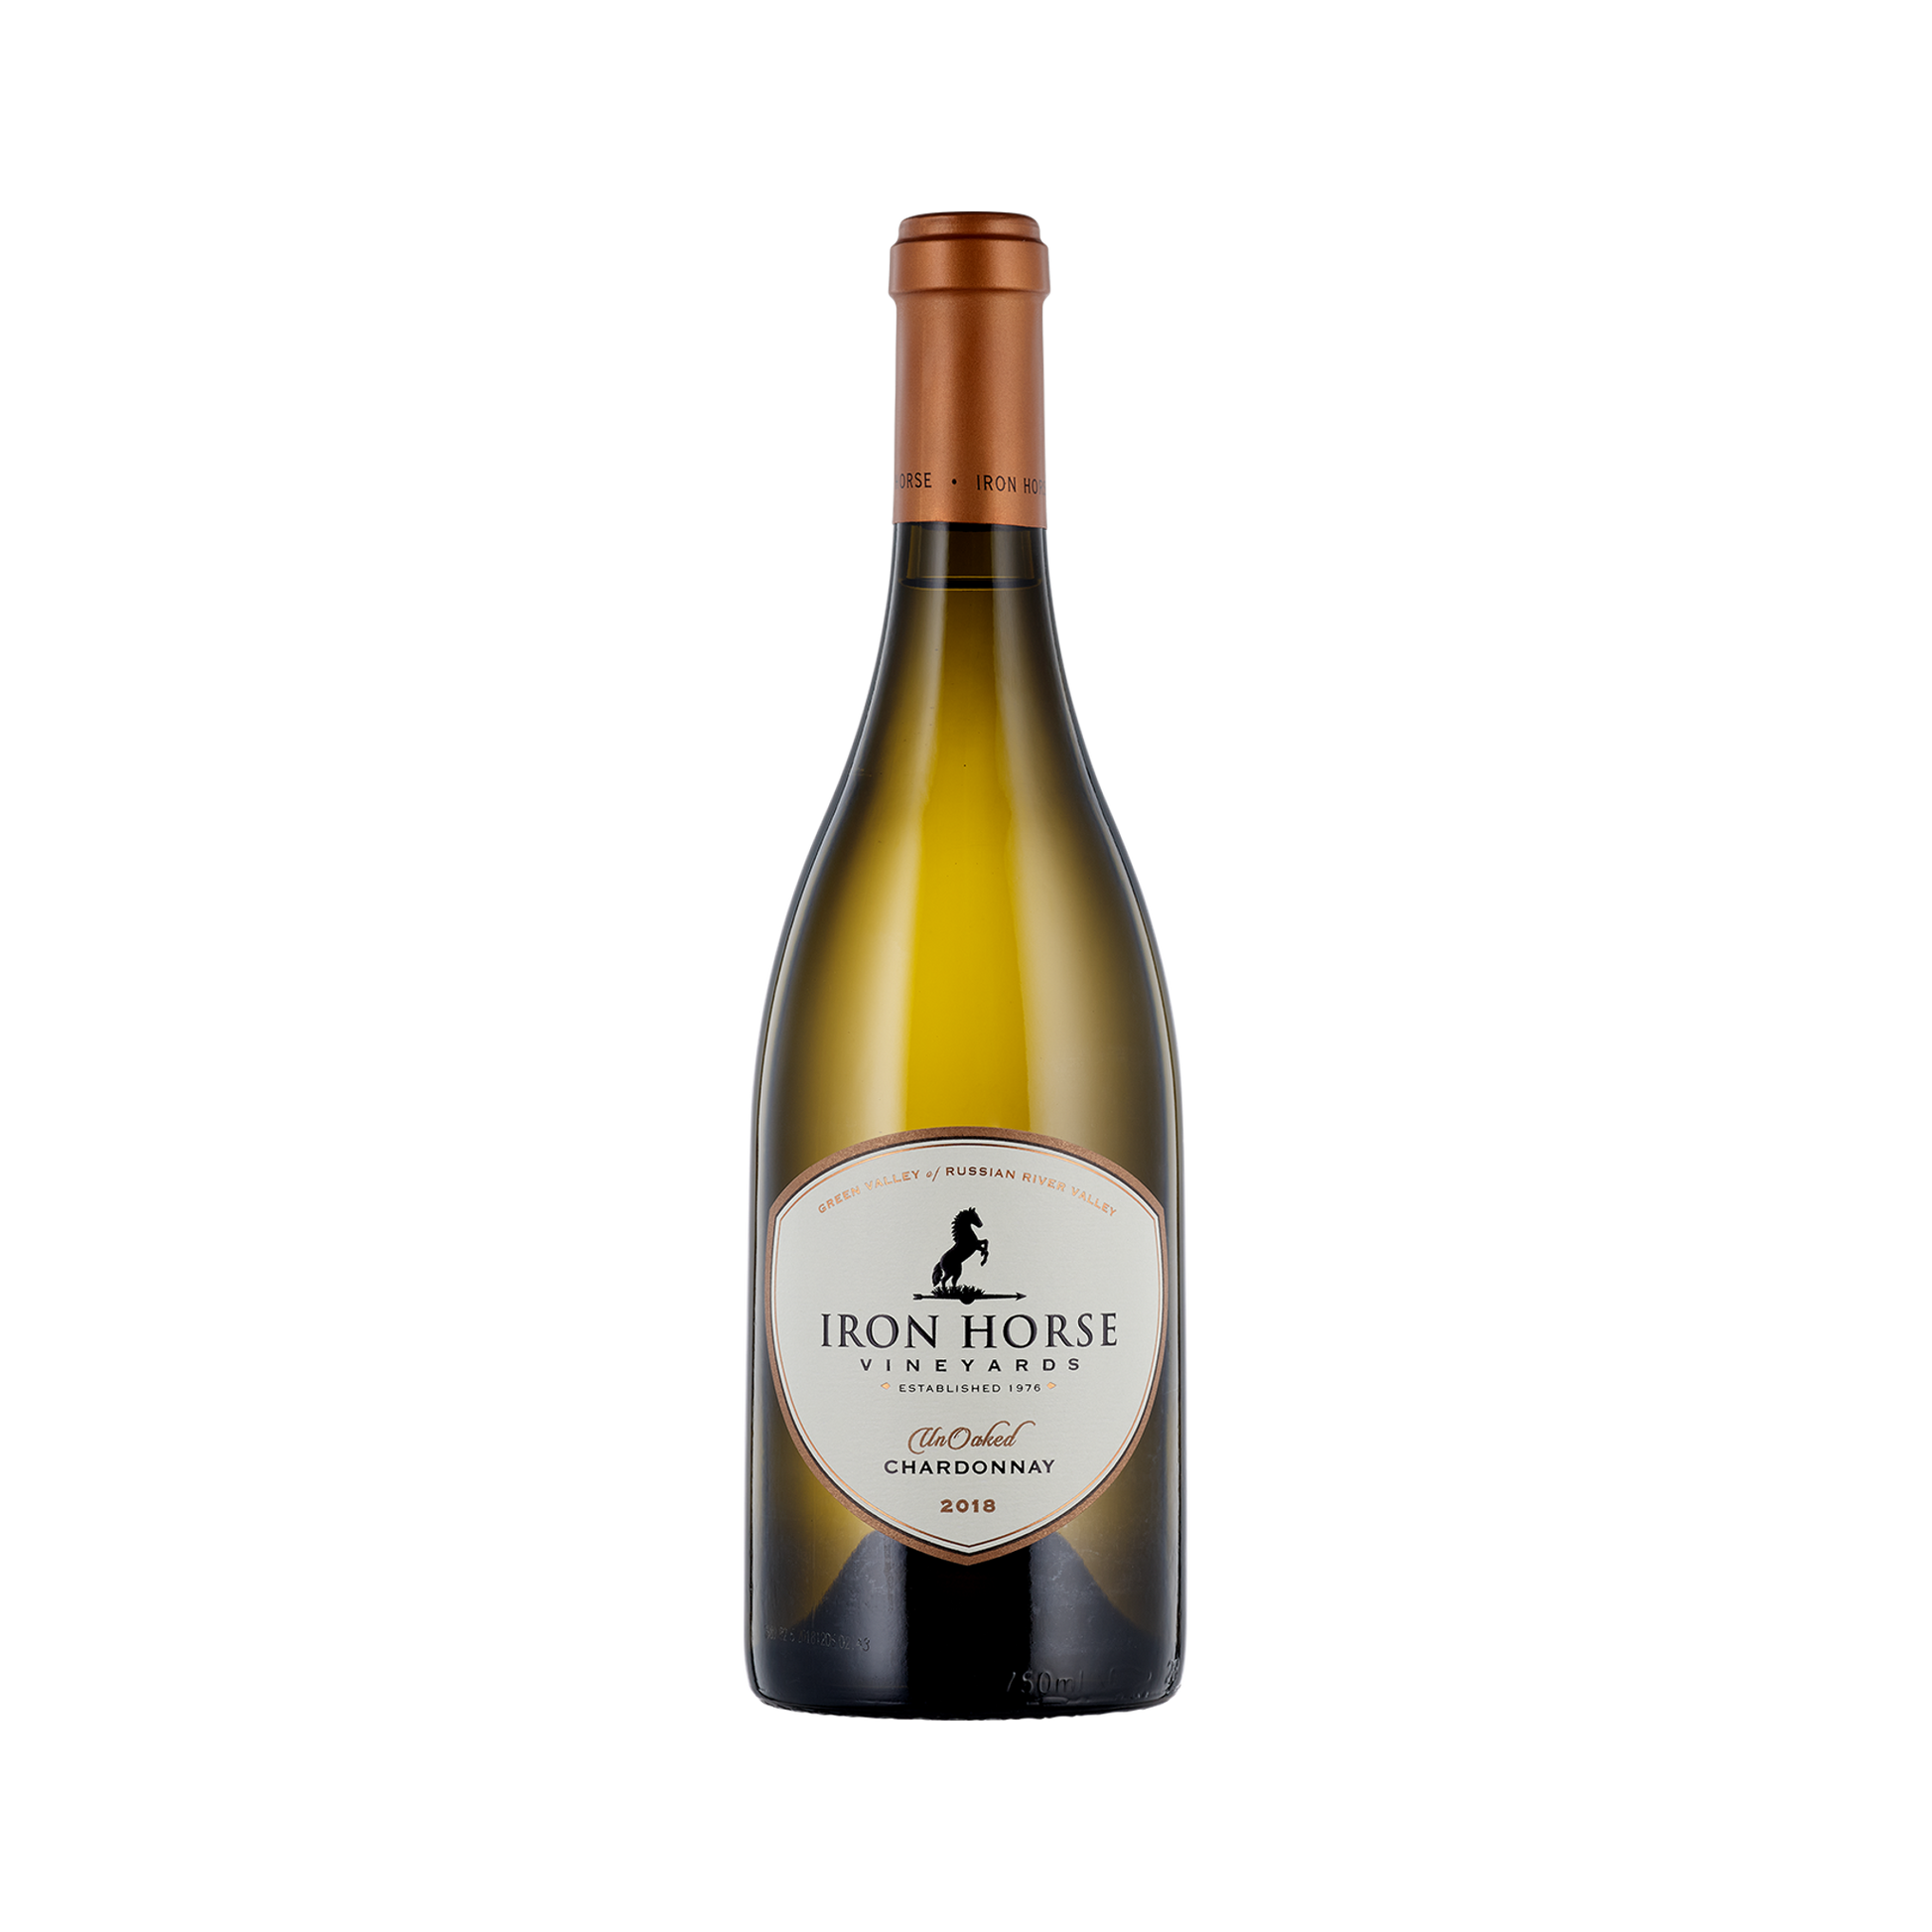 A bottle of Iron Horse Vineyards 2018 Unoaked Chardonnay